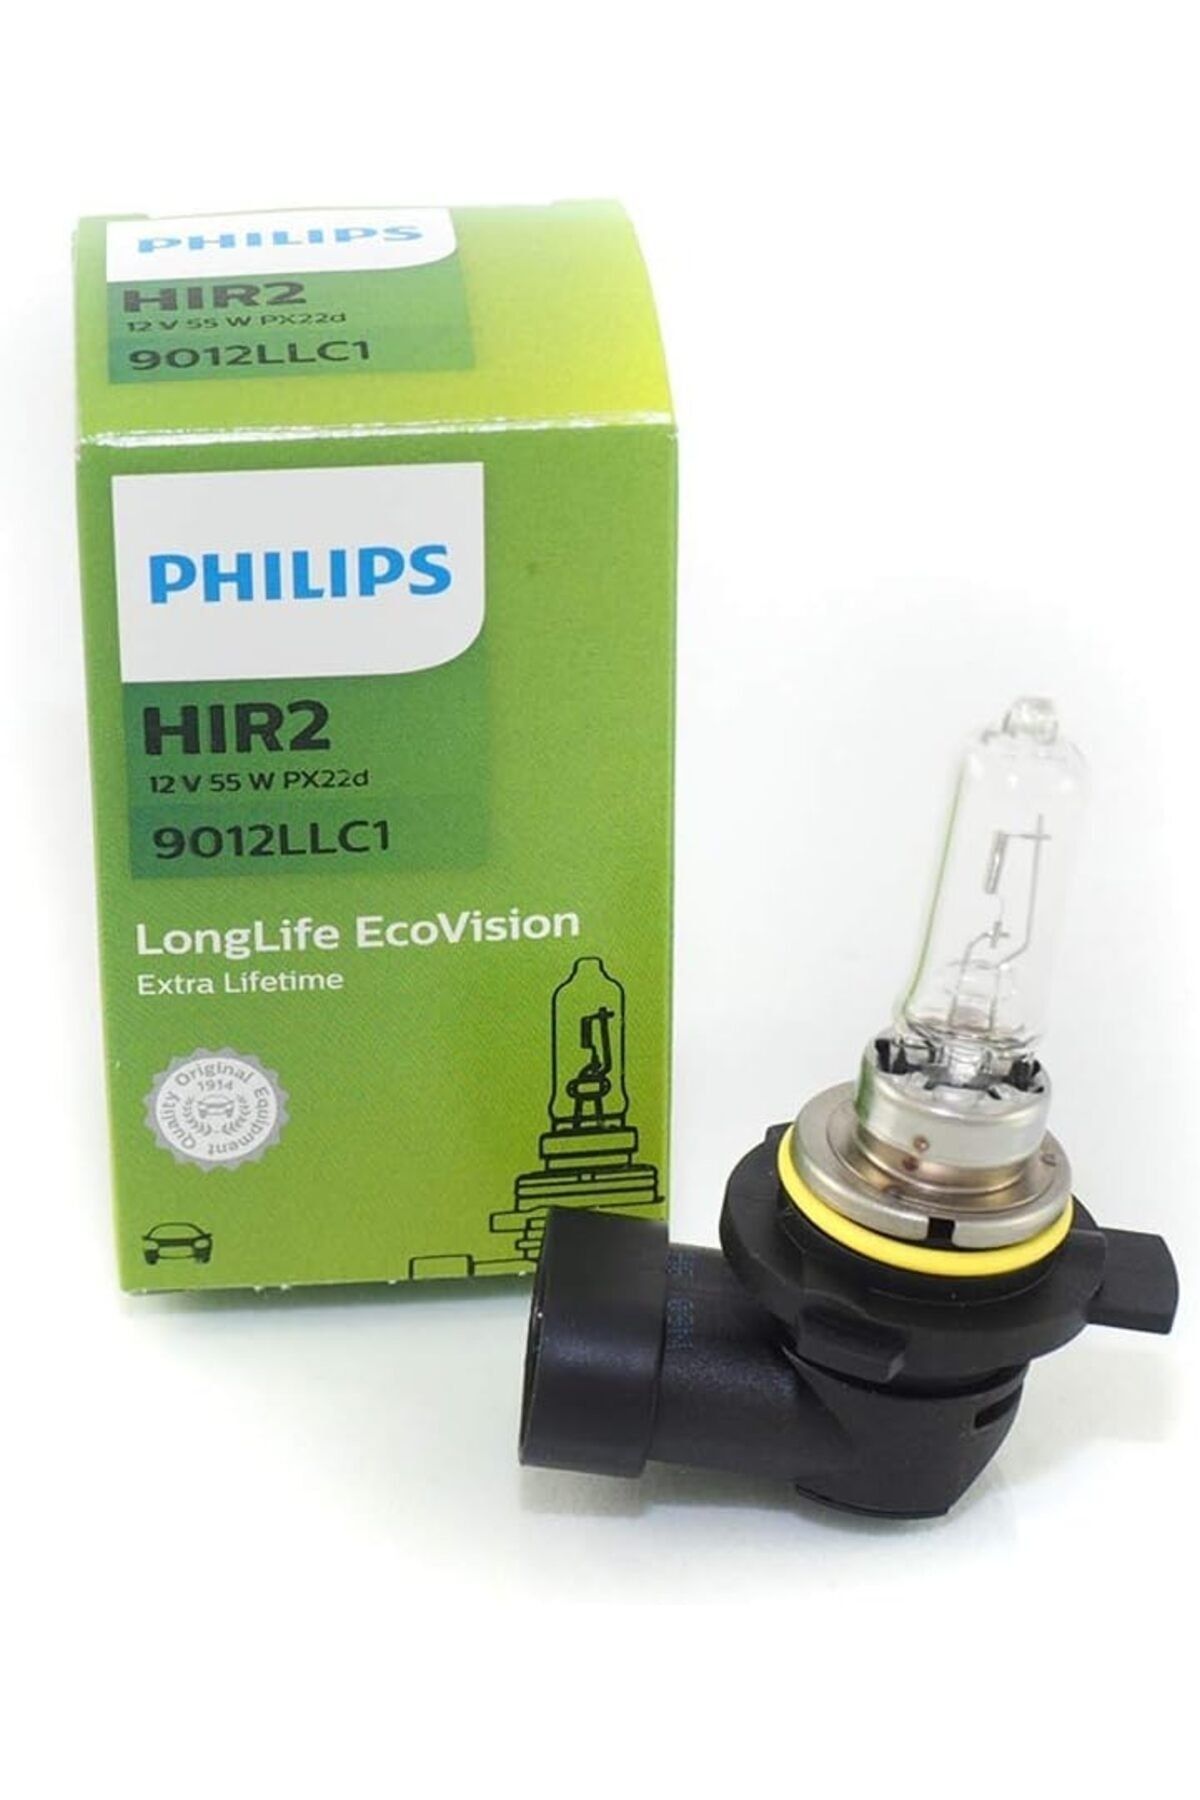 12v hir2. Лампа автомобильная Philips 9012 hir2. Hir2 ll 12v 55w. Hir2 9012 12v 55w. Лампа галогеновая "Philips" hir2 12v 55 Longlife Eco Vision (9012 llc1).